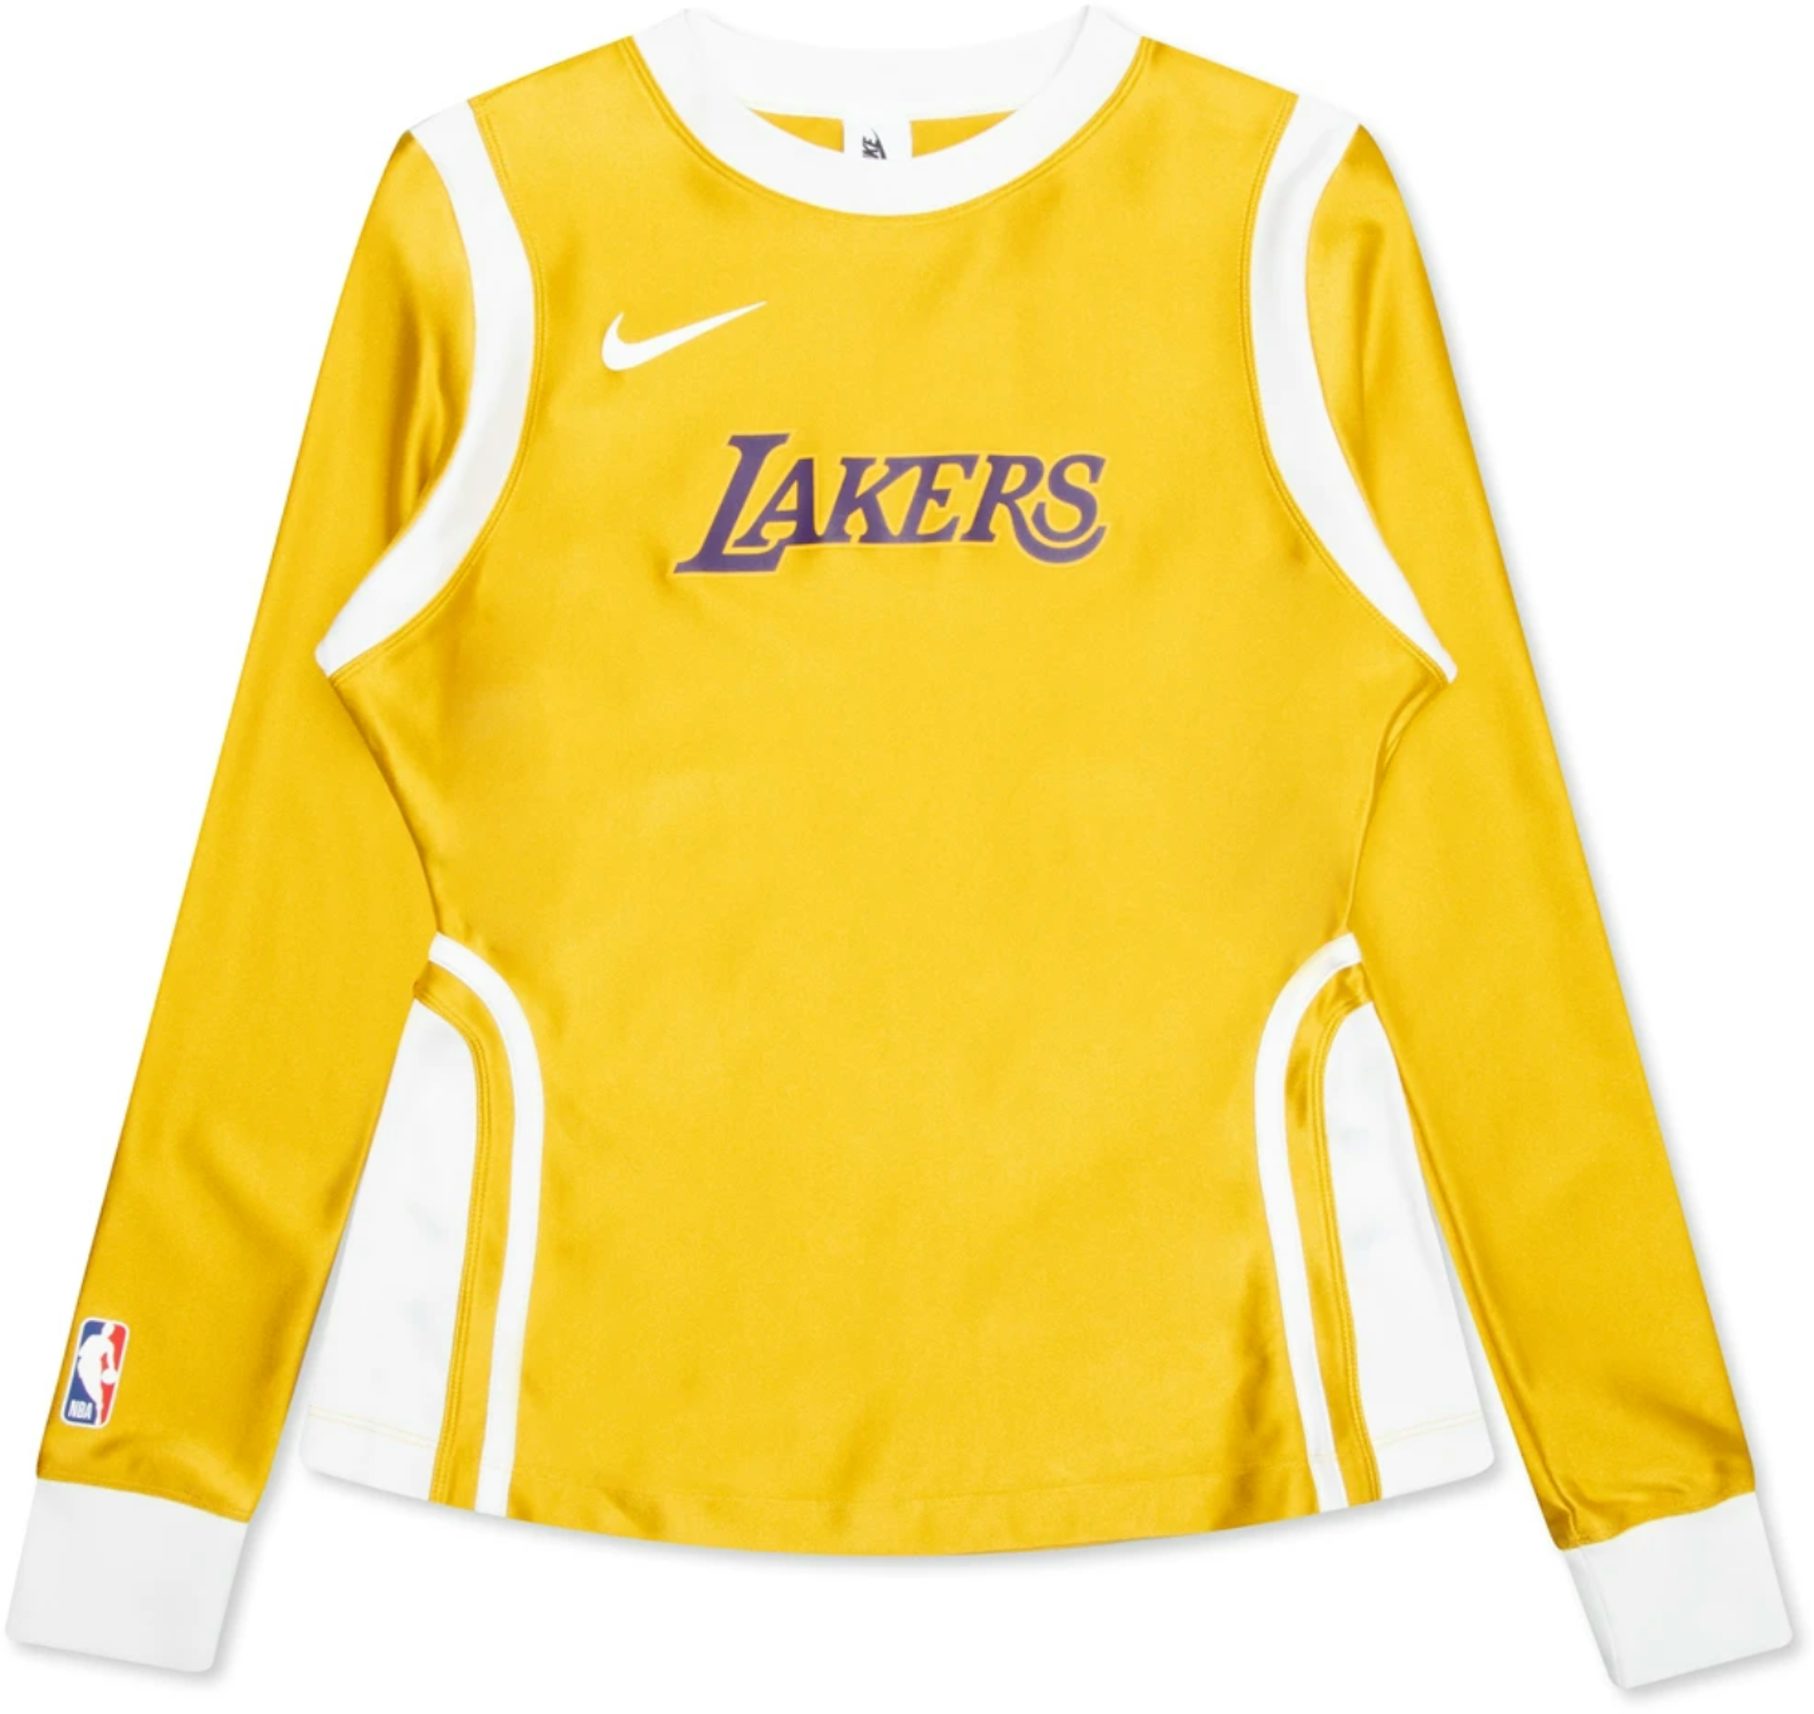 Nike x Ambush NBA Collection Lakers Shirt Gold/White/Purple - FW20 - US